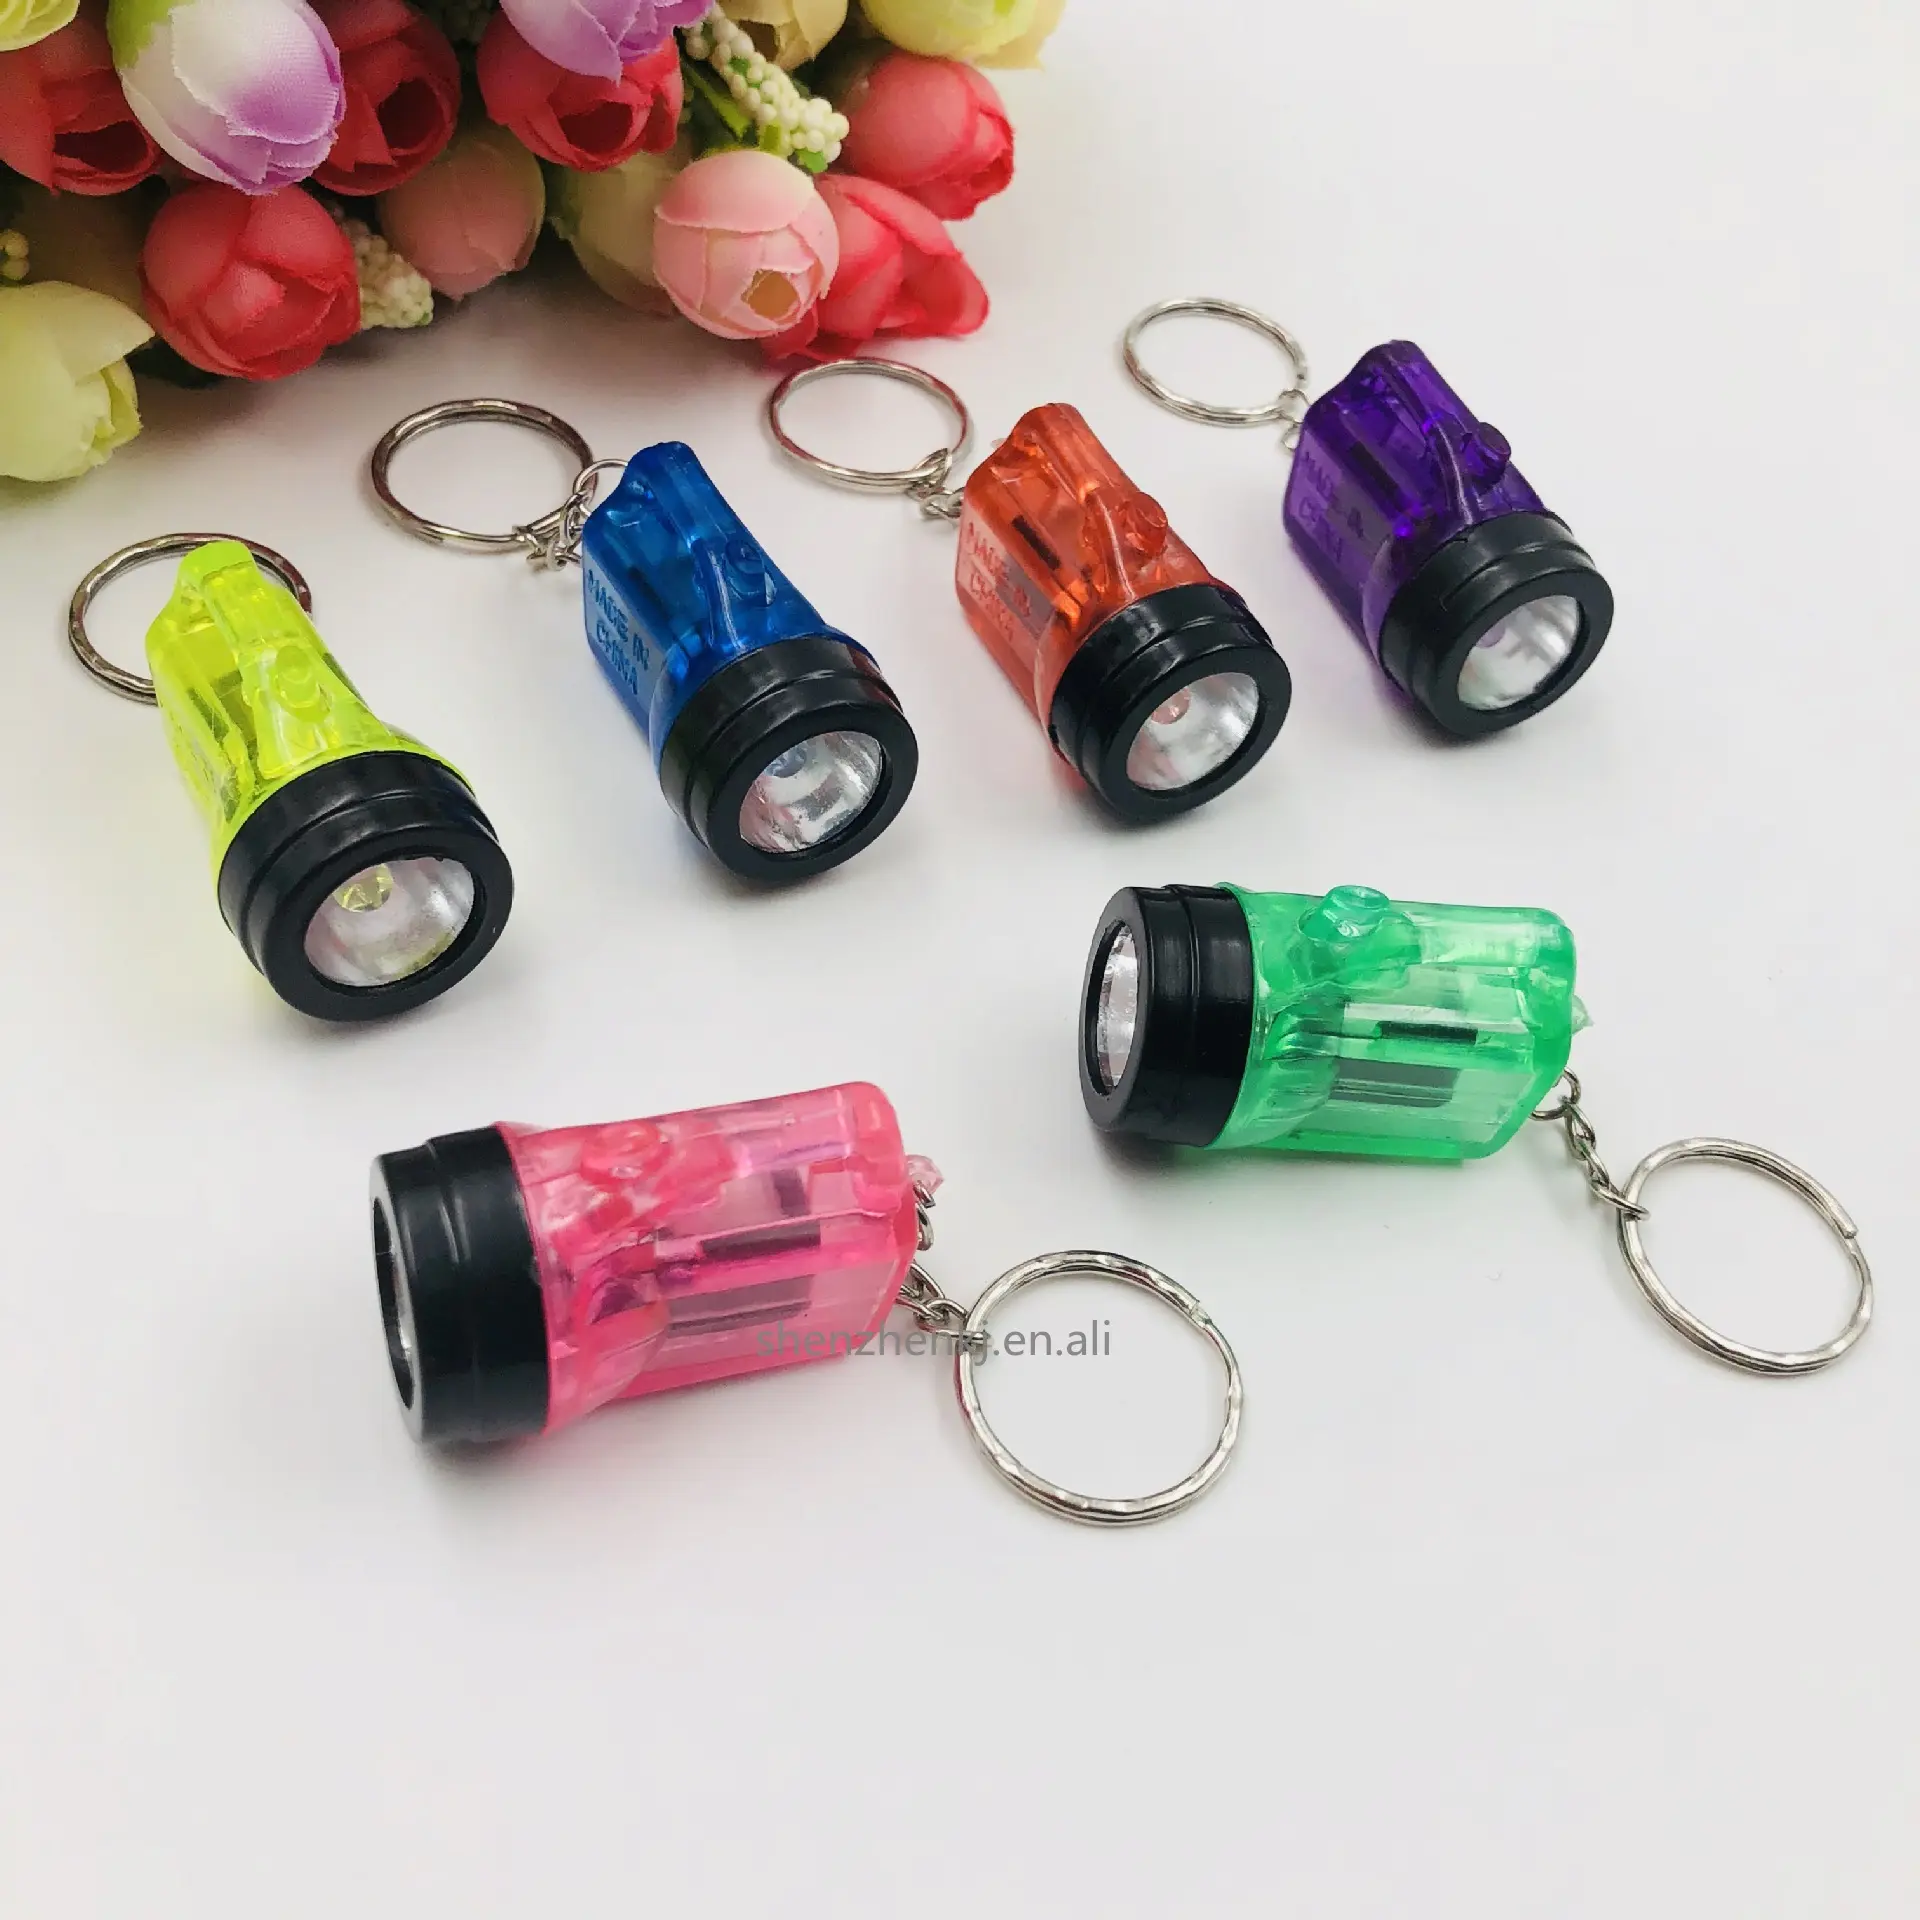 Mini LED Flashlight Plastic Mini Keychain Light Children Toy Lamp Button Battery Flashlight for Kids Birthday Party Favors